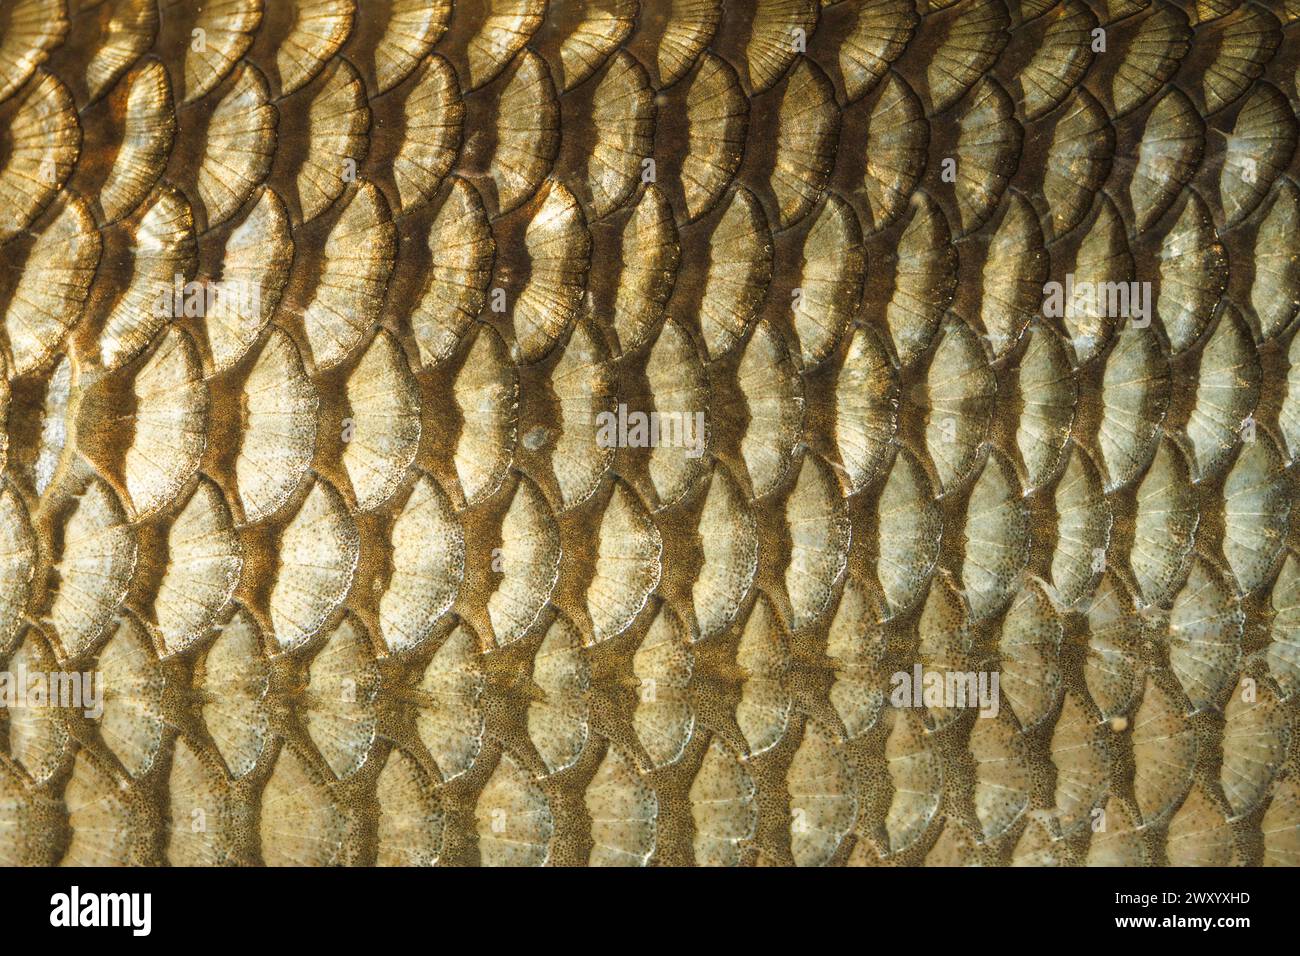 chub (Leuciscus cephalus), fish scales, detail, Germany Stock Photo